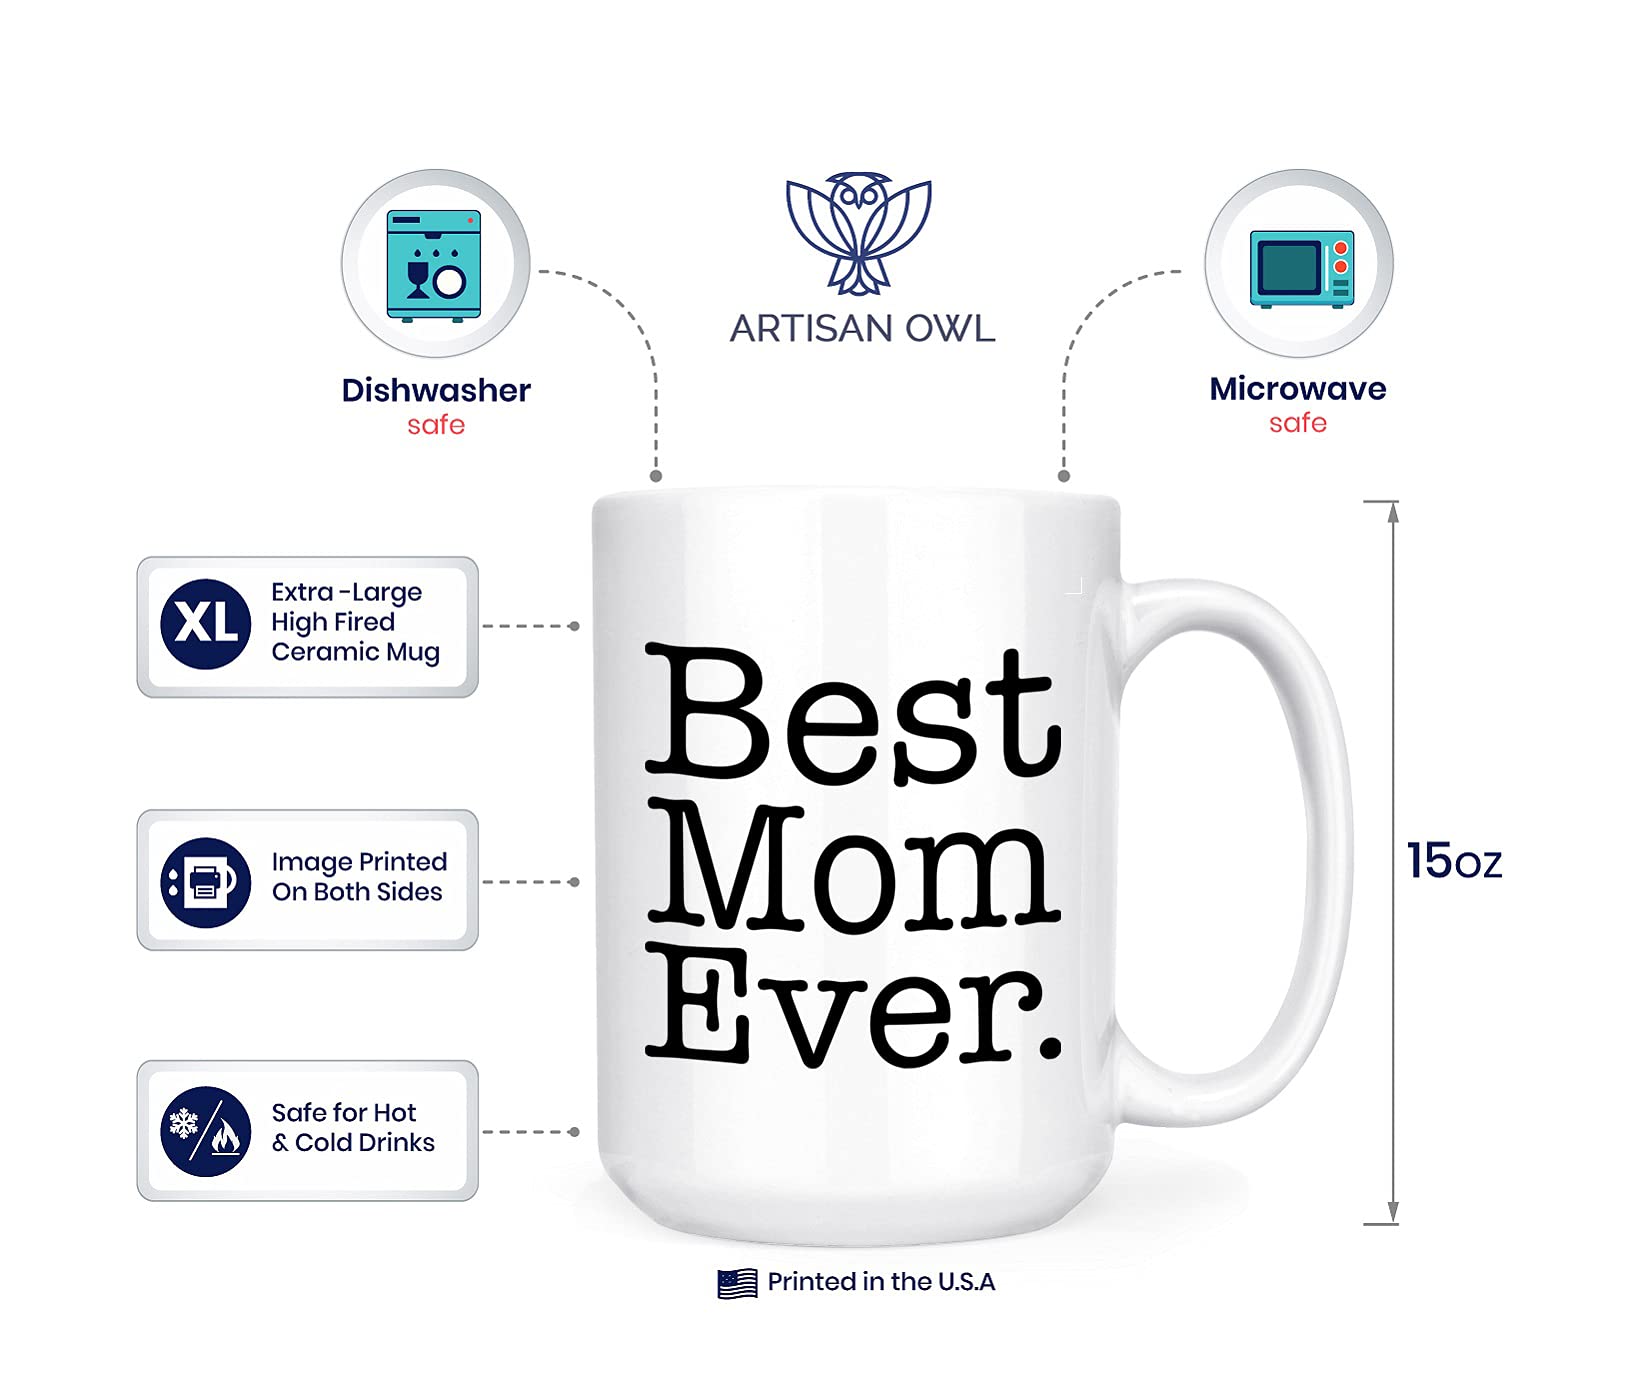 Artisan Owl Best Mom Ever - 15oz Double-Sided Coffee Tea Mug (White)